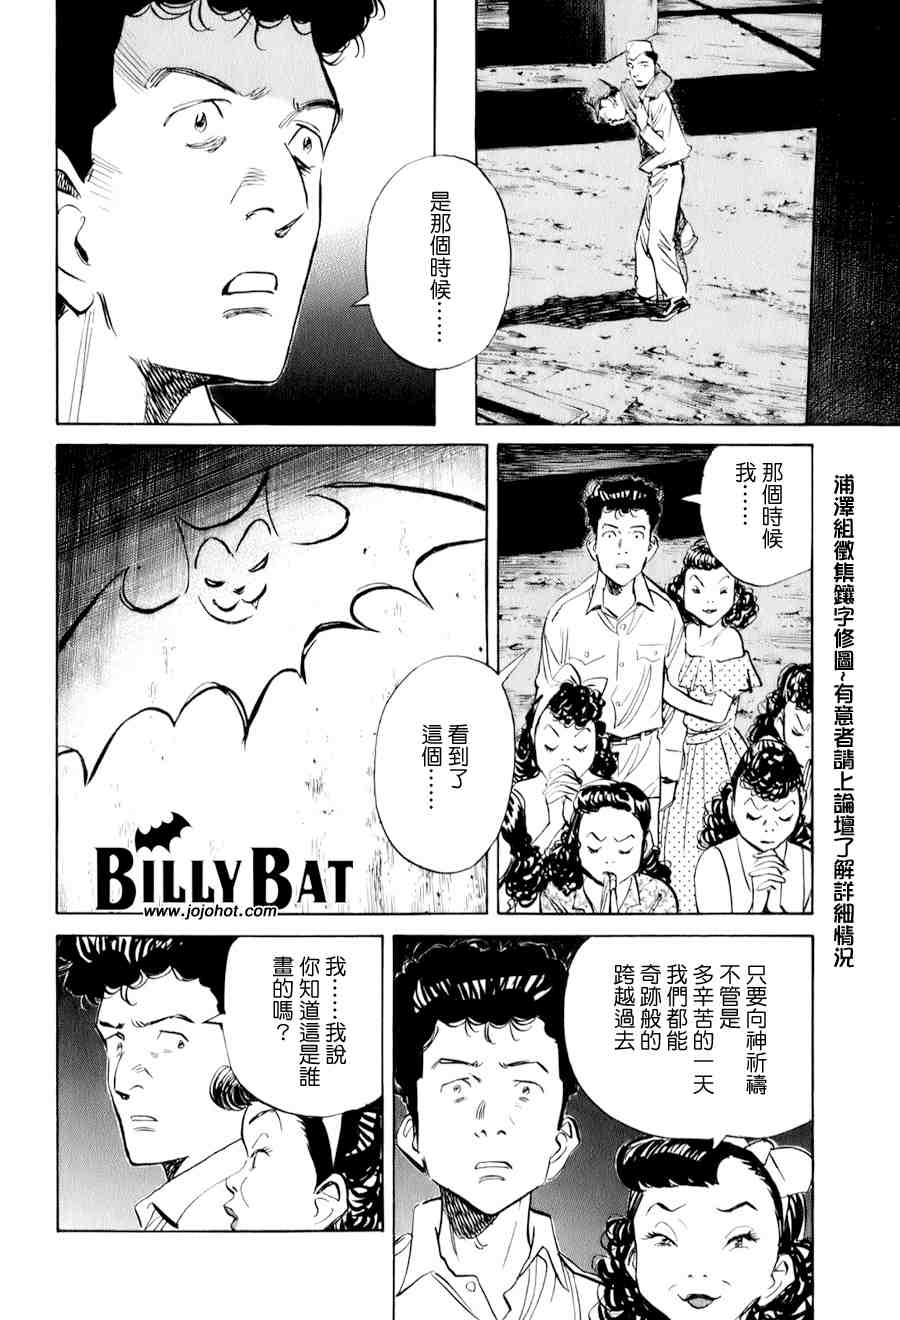 Billy_Bat - 第1卷(3/4) - 5